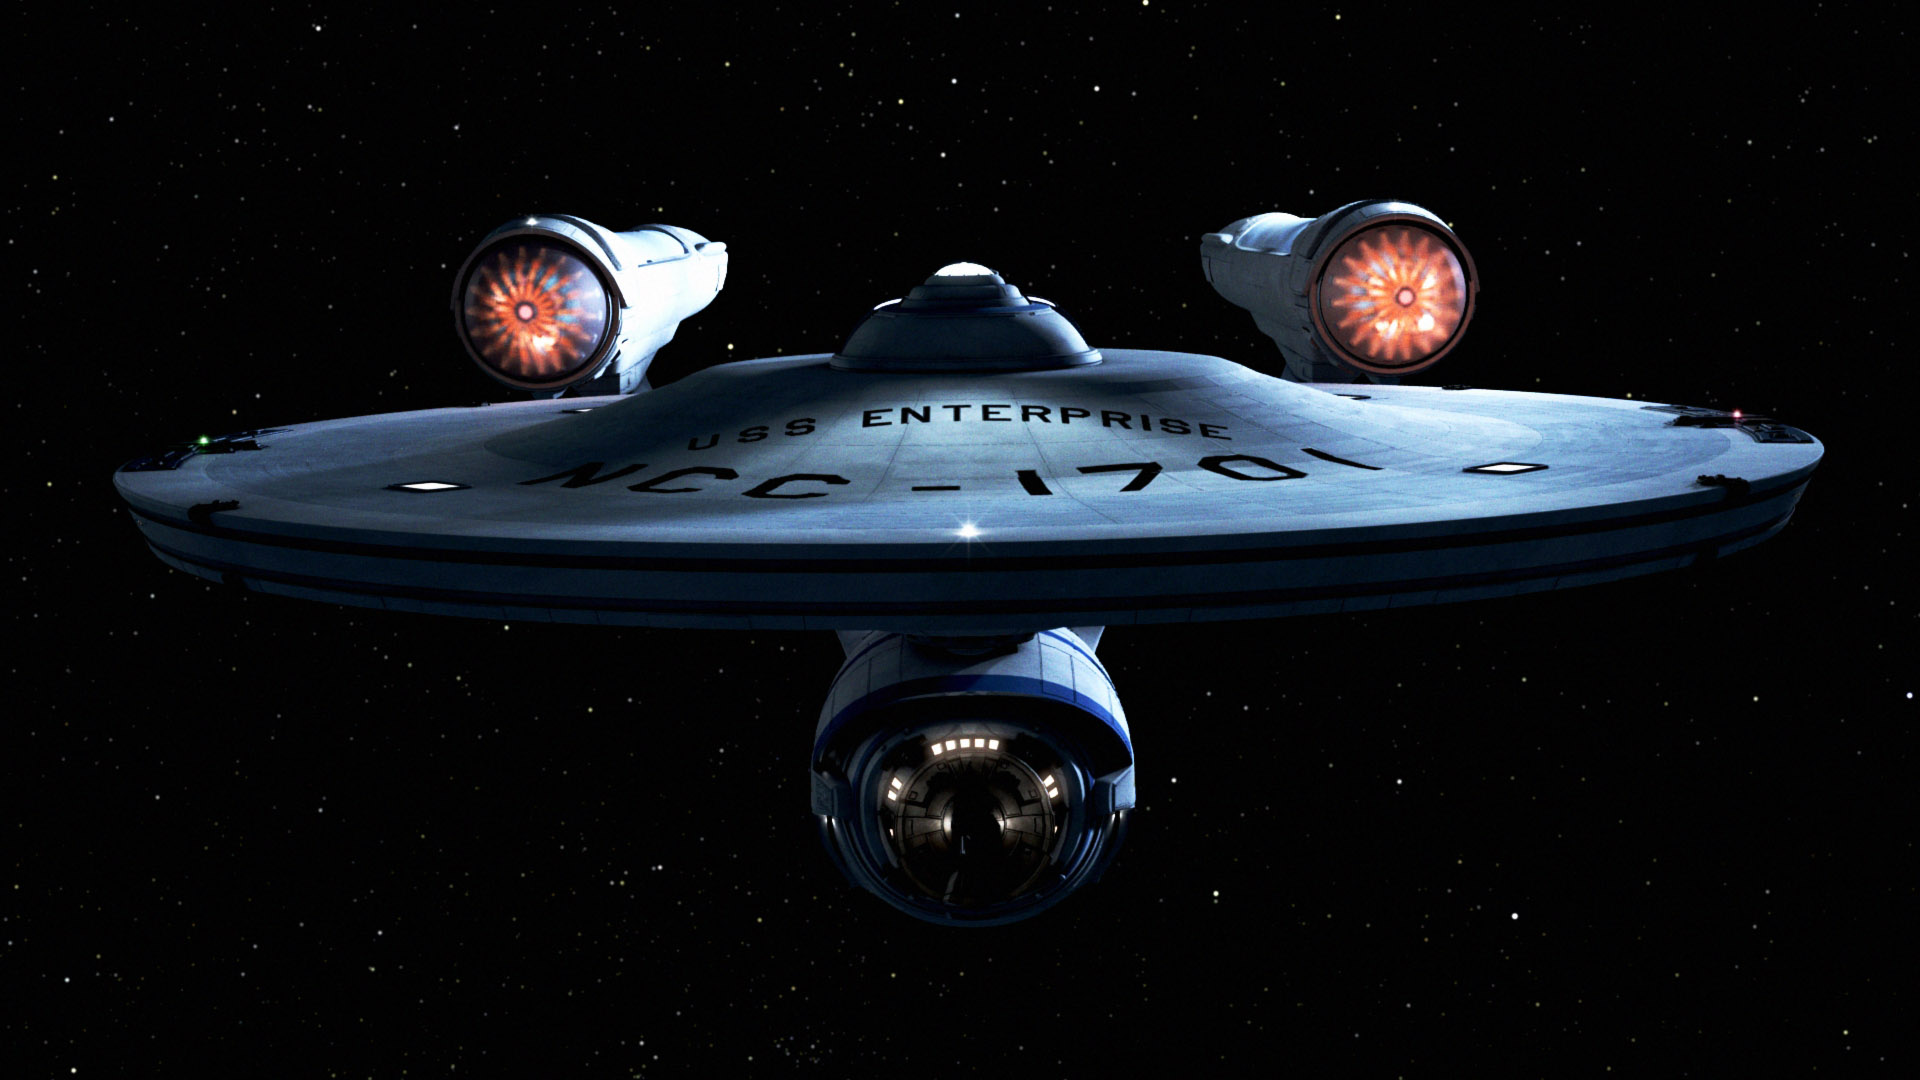 Star Trek, spaceships, Enterprise, USS Enterprise - desktop wallpaper